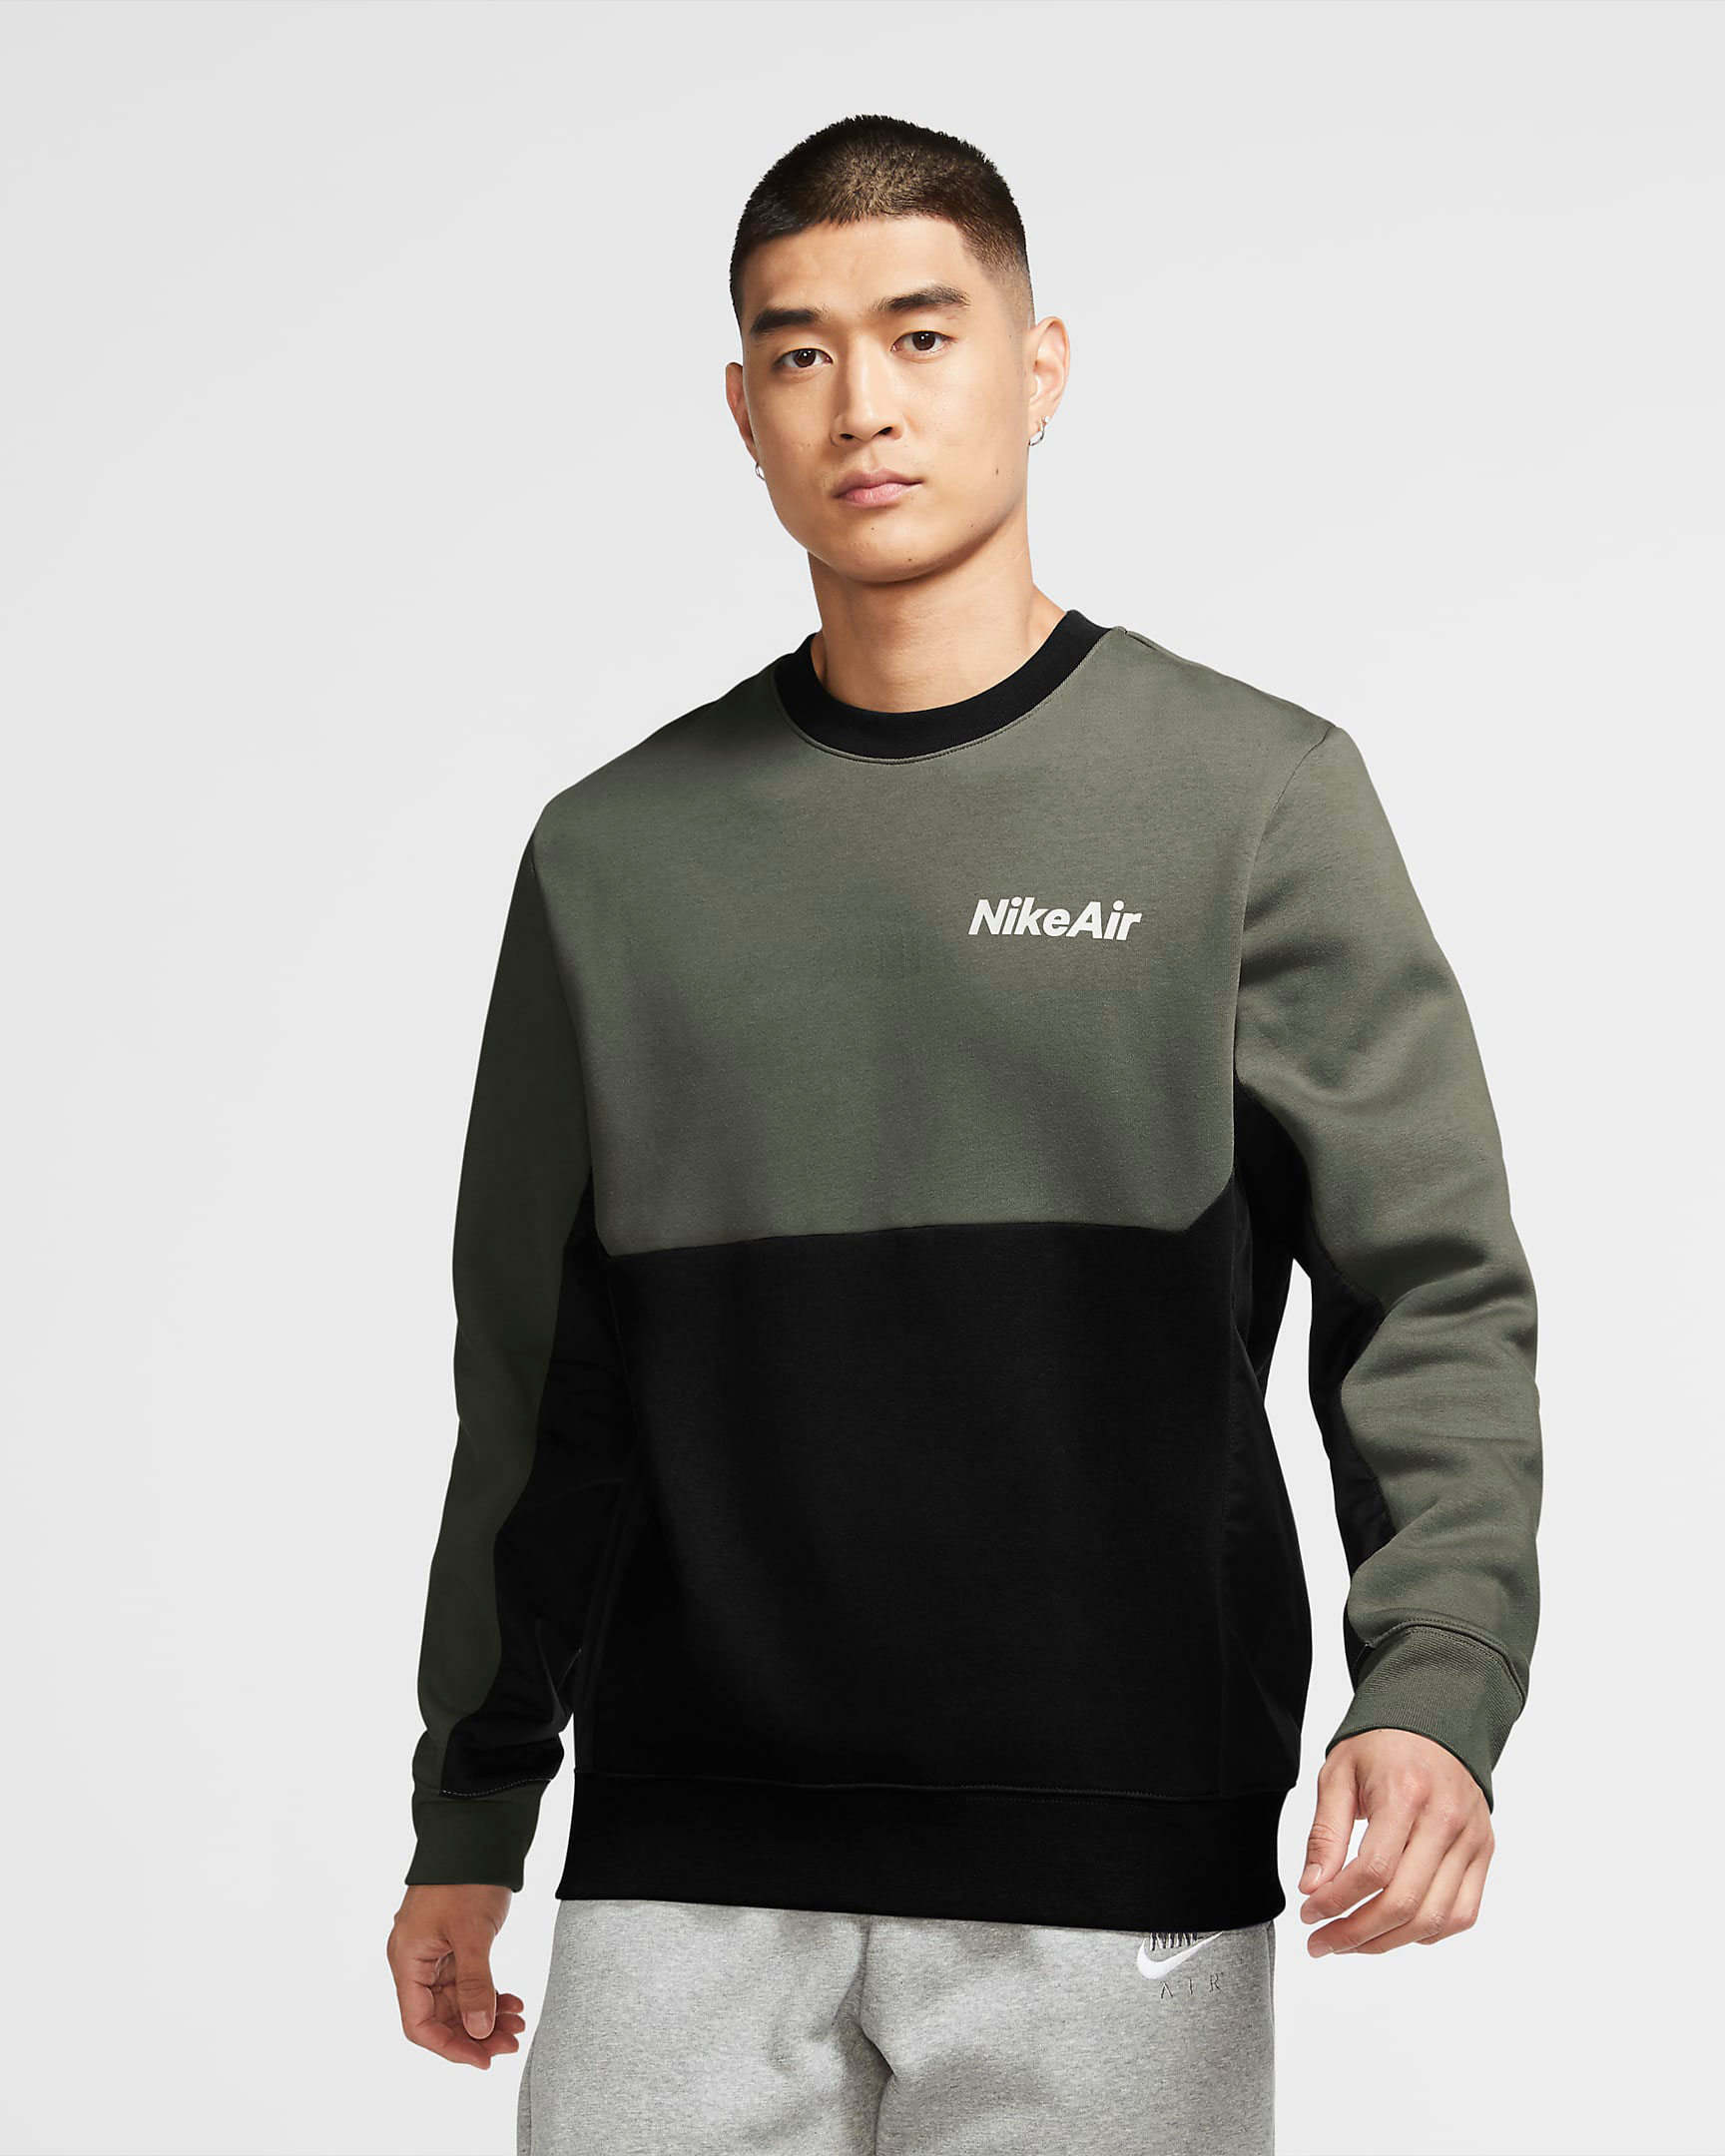 Nike Air Crew Sweatshirts for Fall 2020 | SneakerFits.com